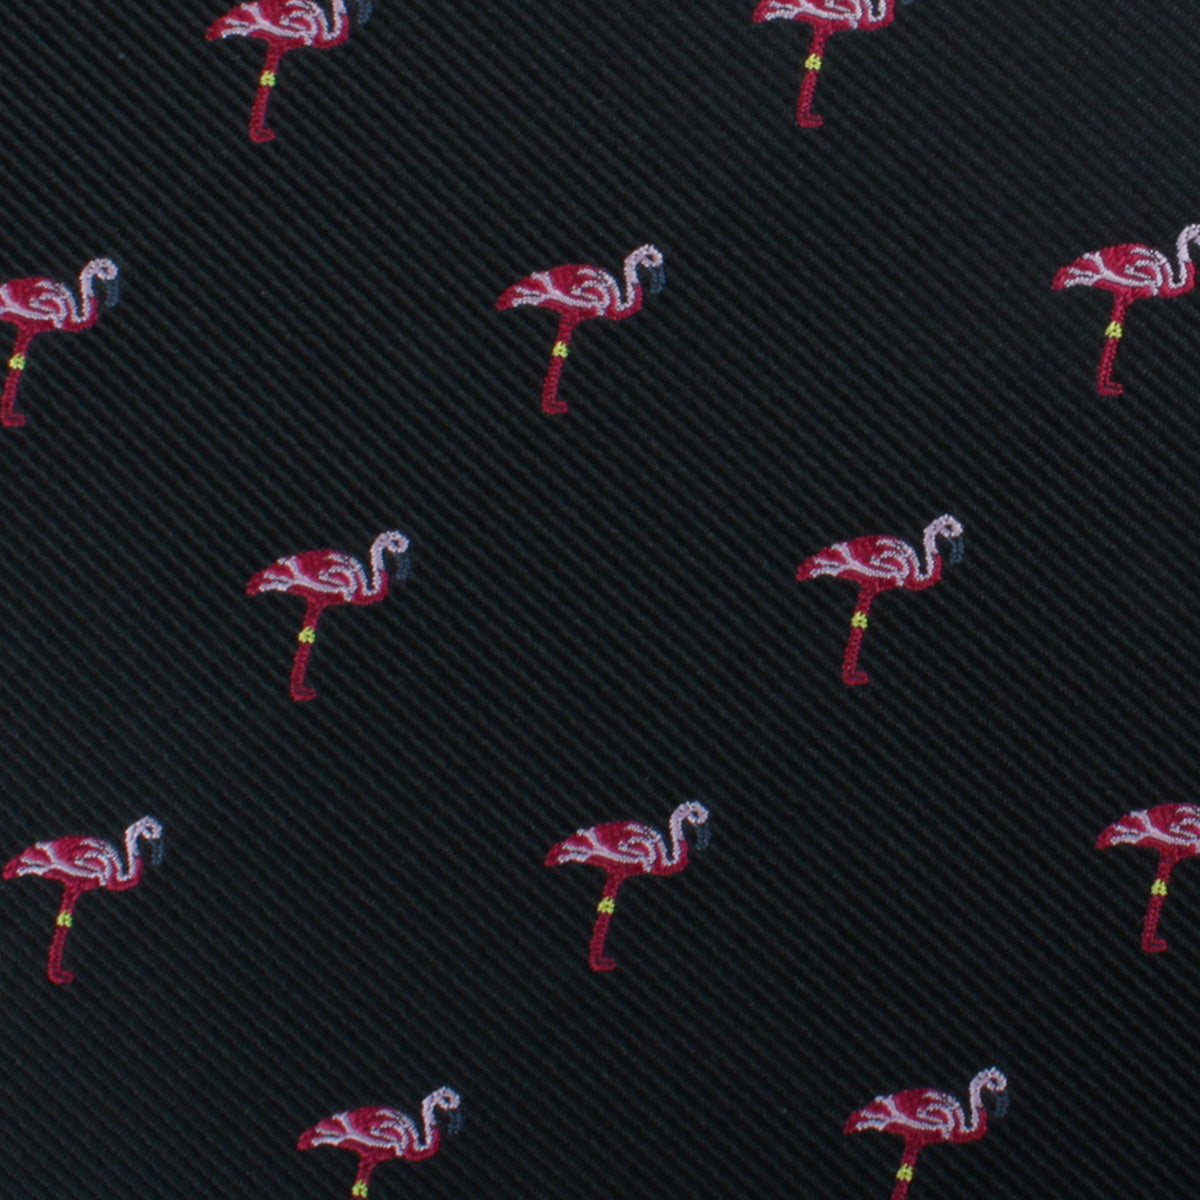 Aruba Island Black Flamingo Kids Bow Tie Fabric